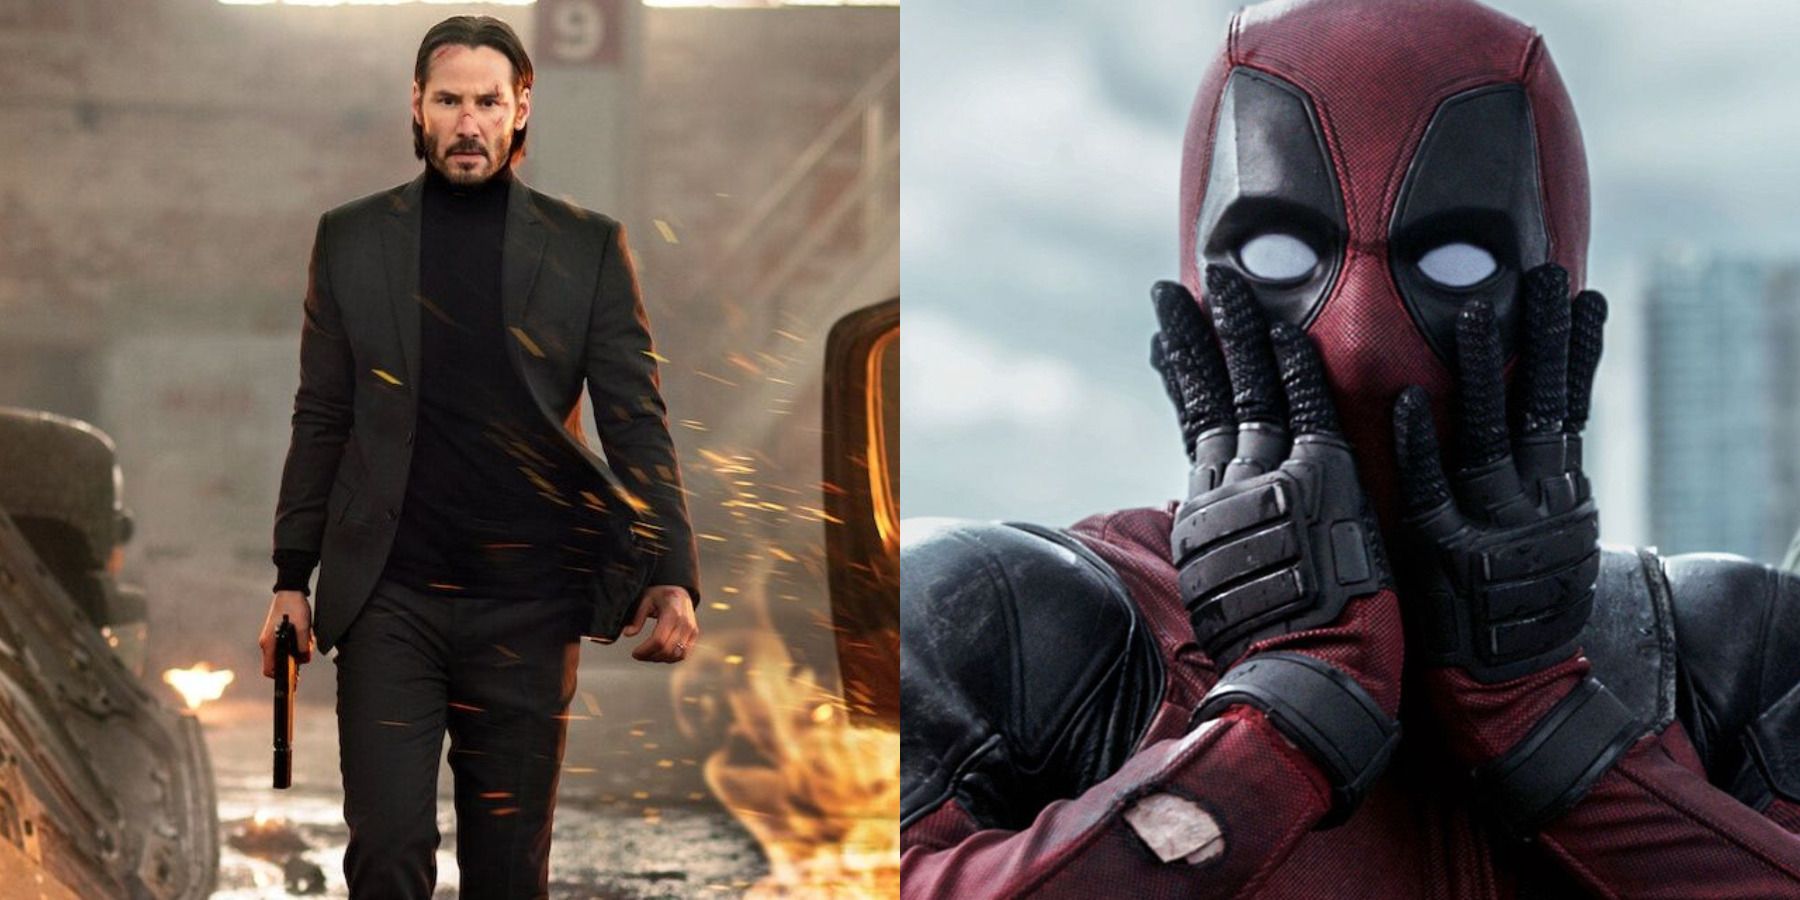 Best movie anti-heroes feature split image John Wick and Deadpool